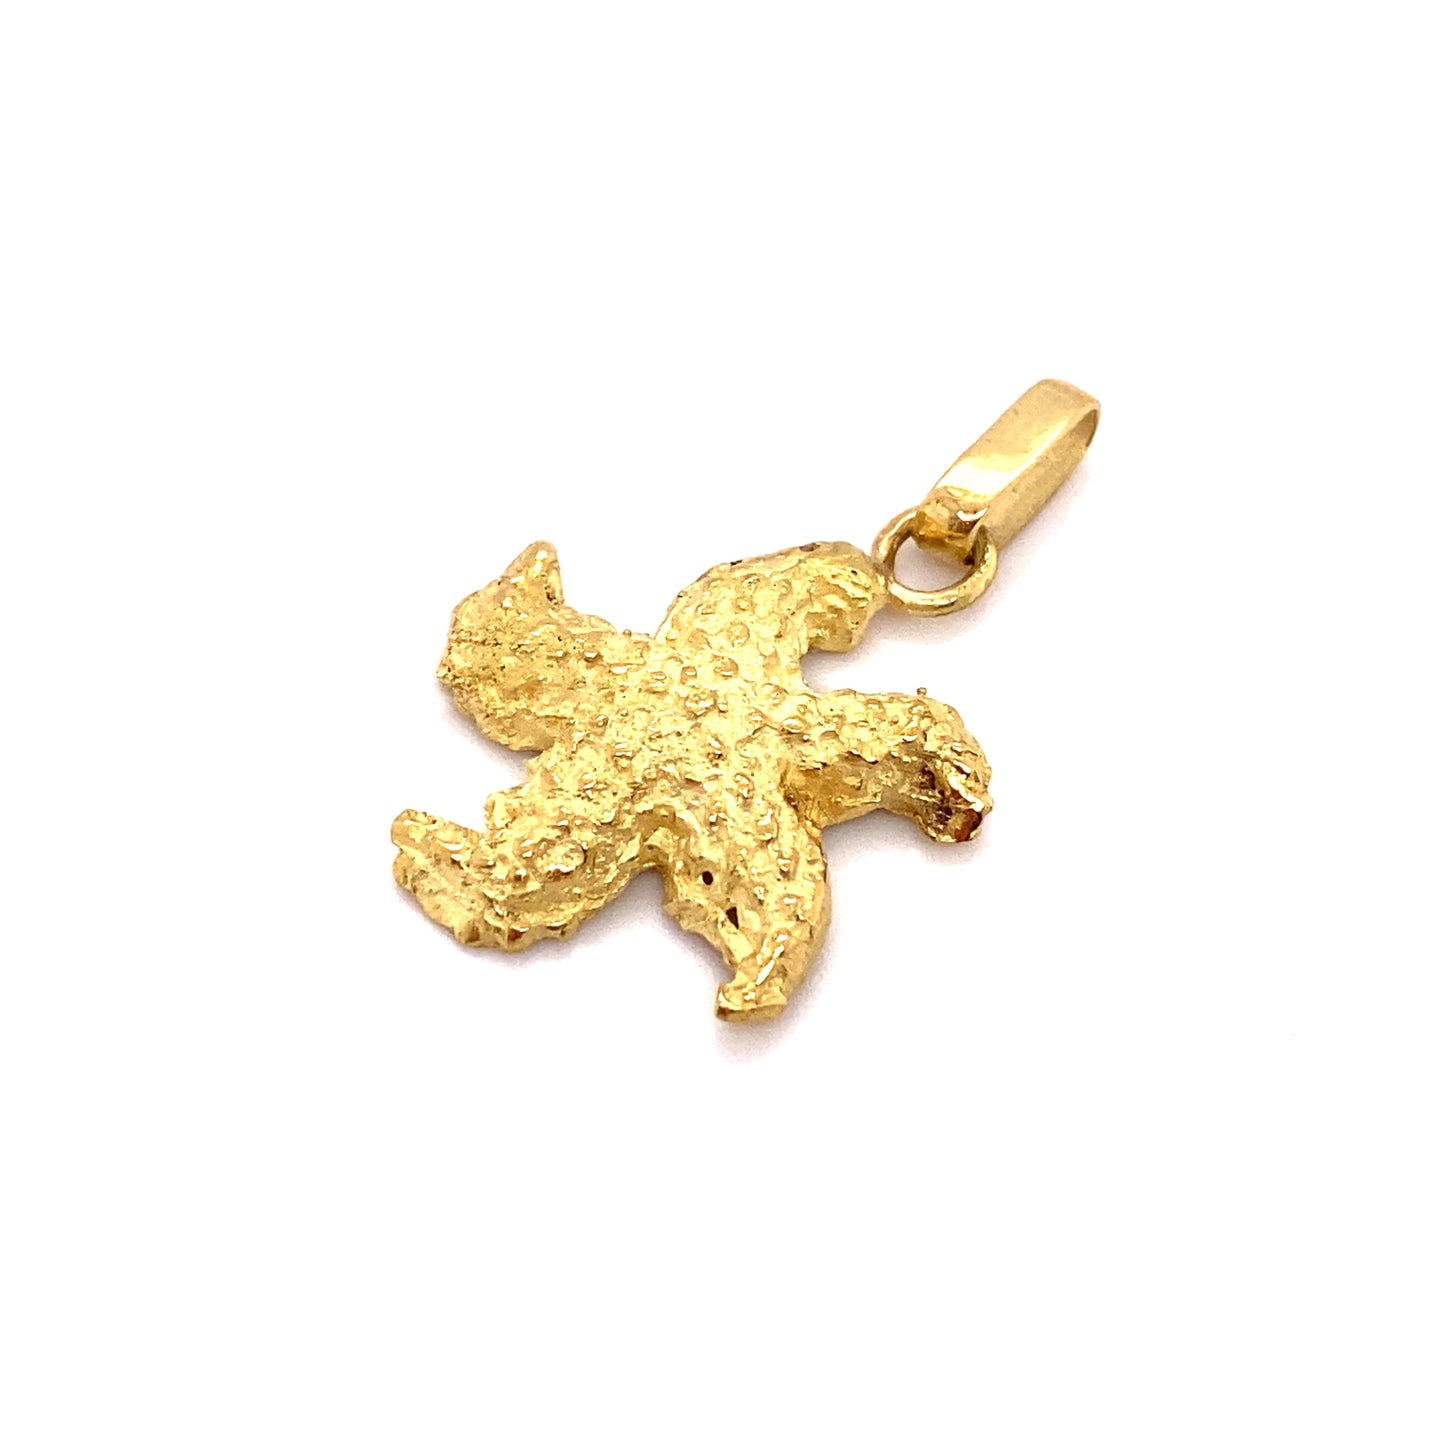 Vintage Handmade Starfish Pendant in 18K Gold